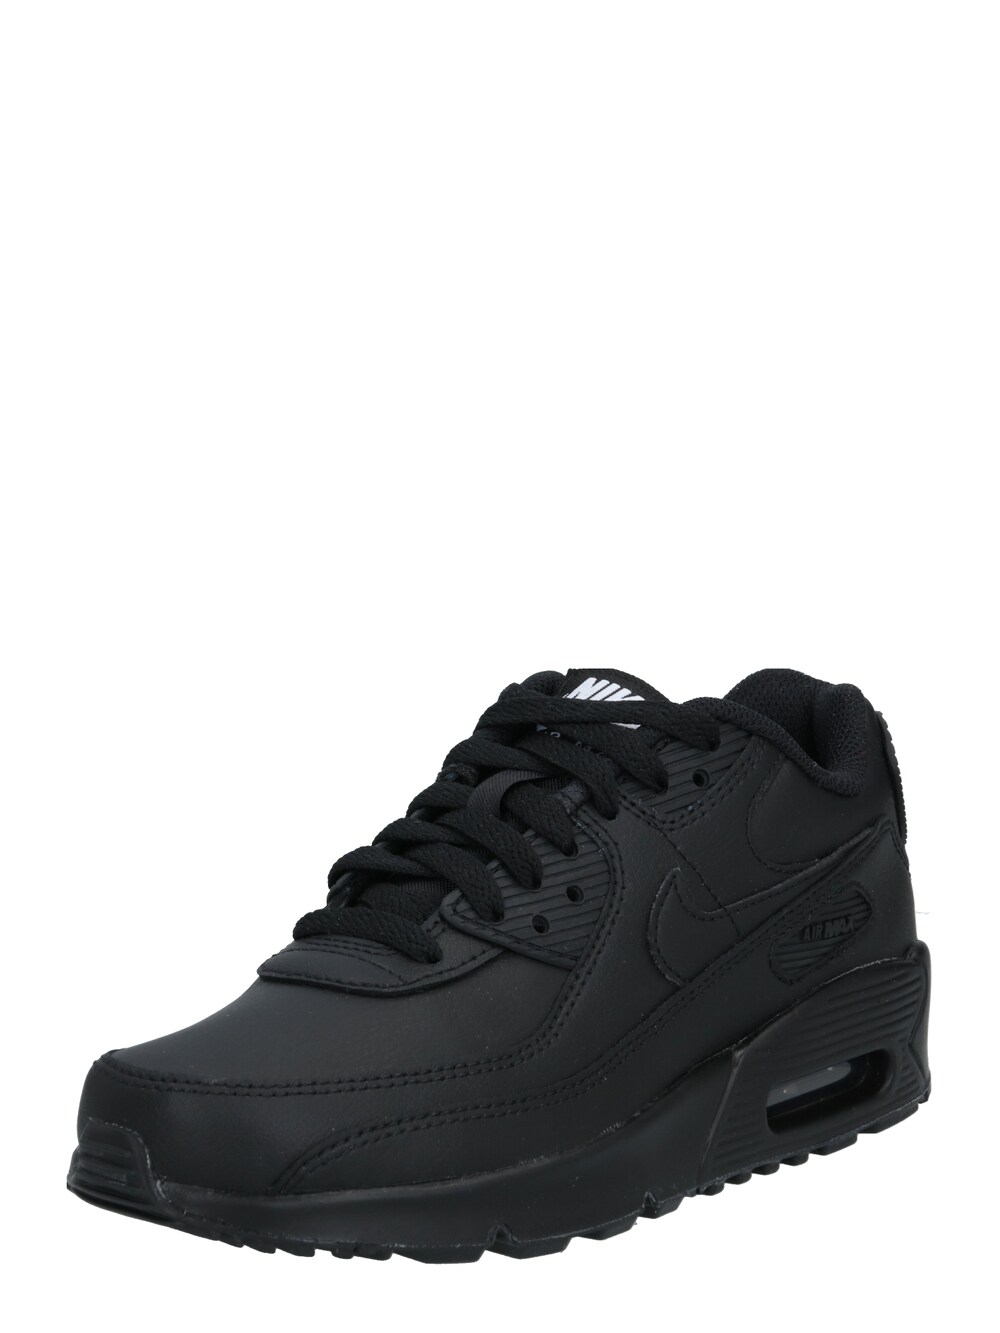 Кроссовки Nike Sportswear Nike Air Max 90 LTR, черный кроссовки nike air max 90 ltr черный